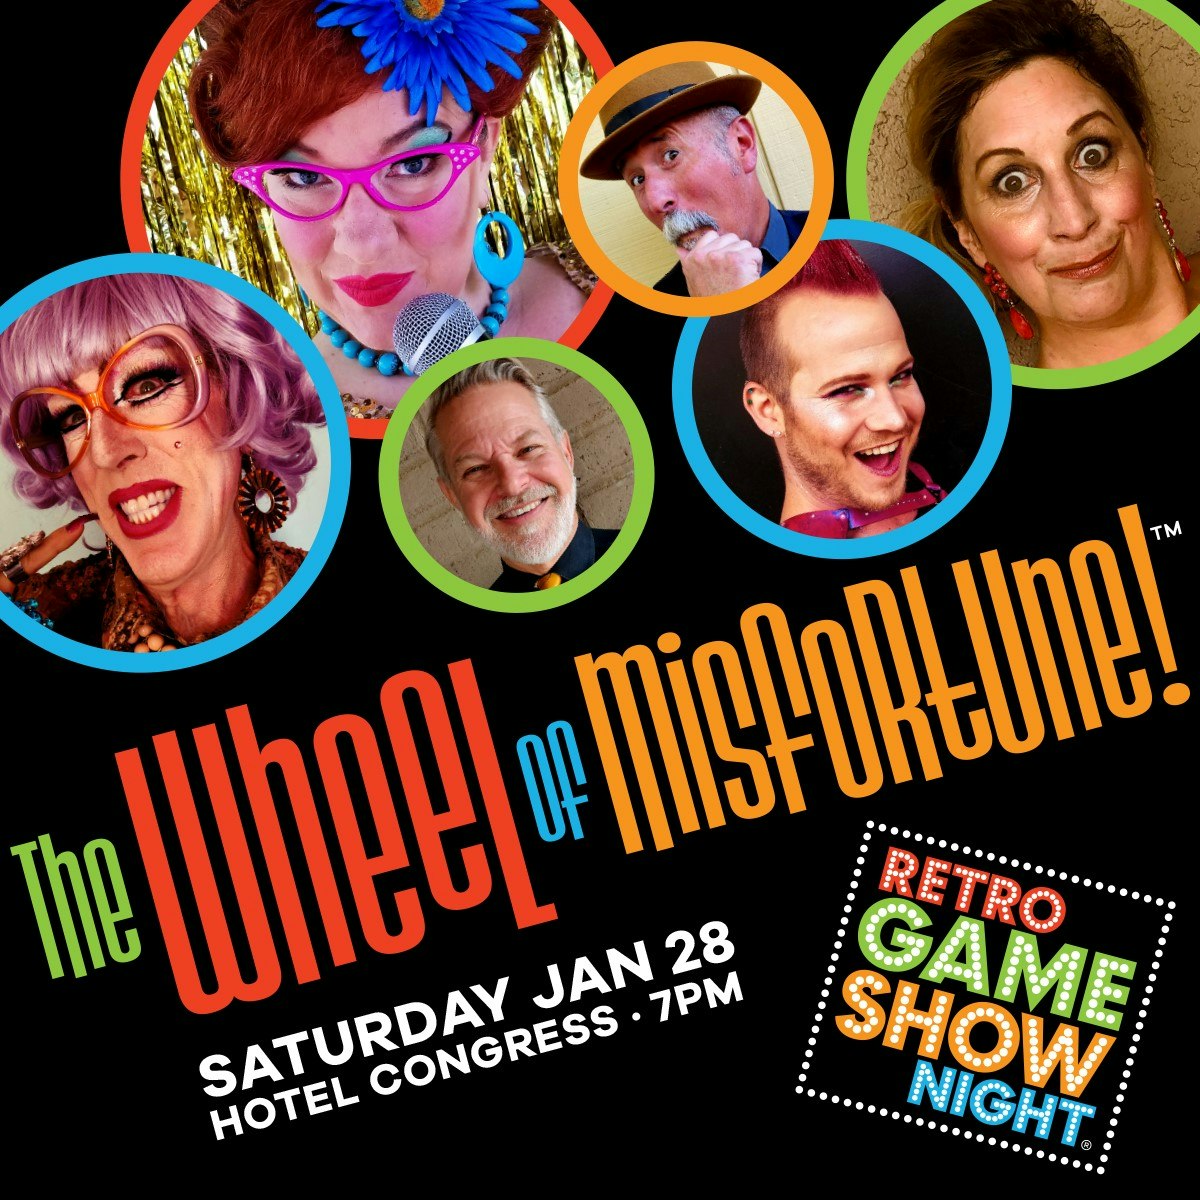 Retro Game Show Night Presents The Wheel of Misfortune!